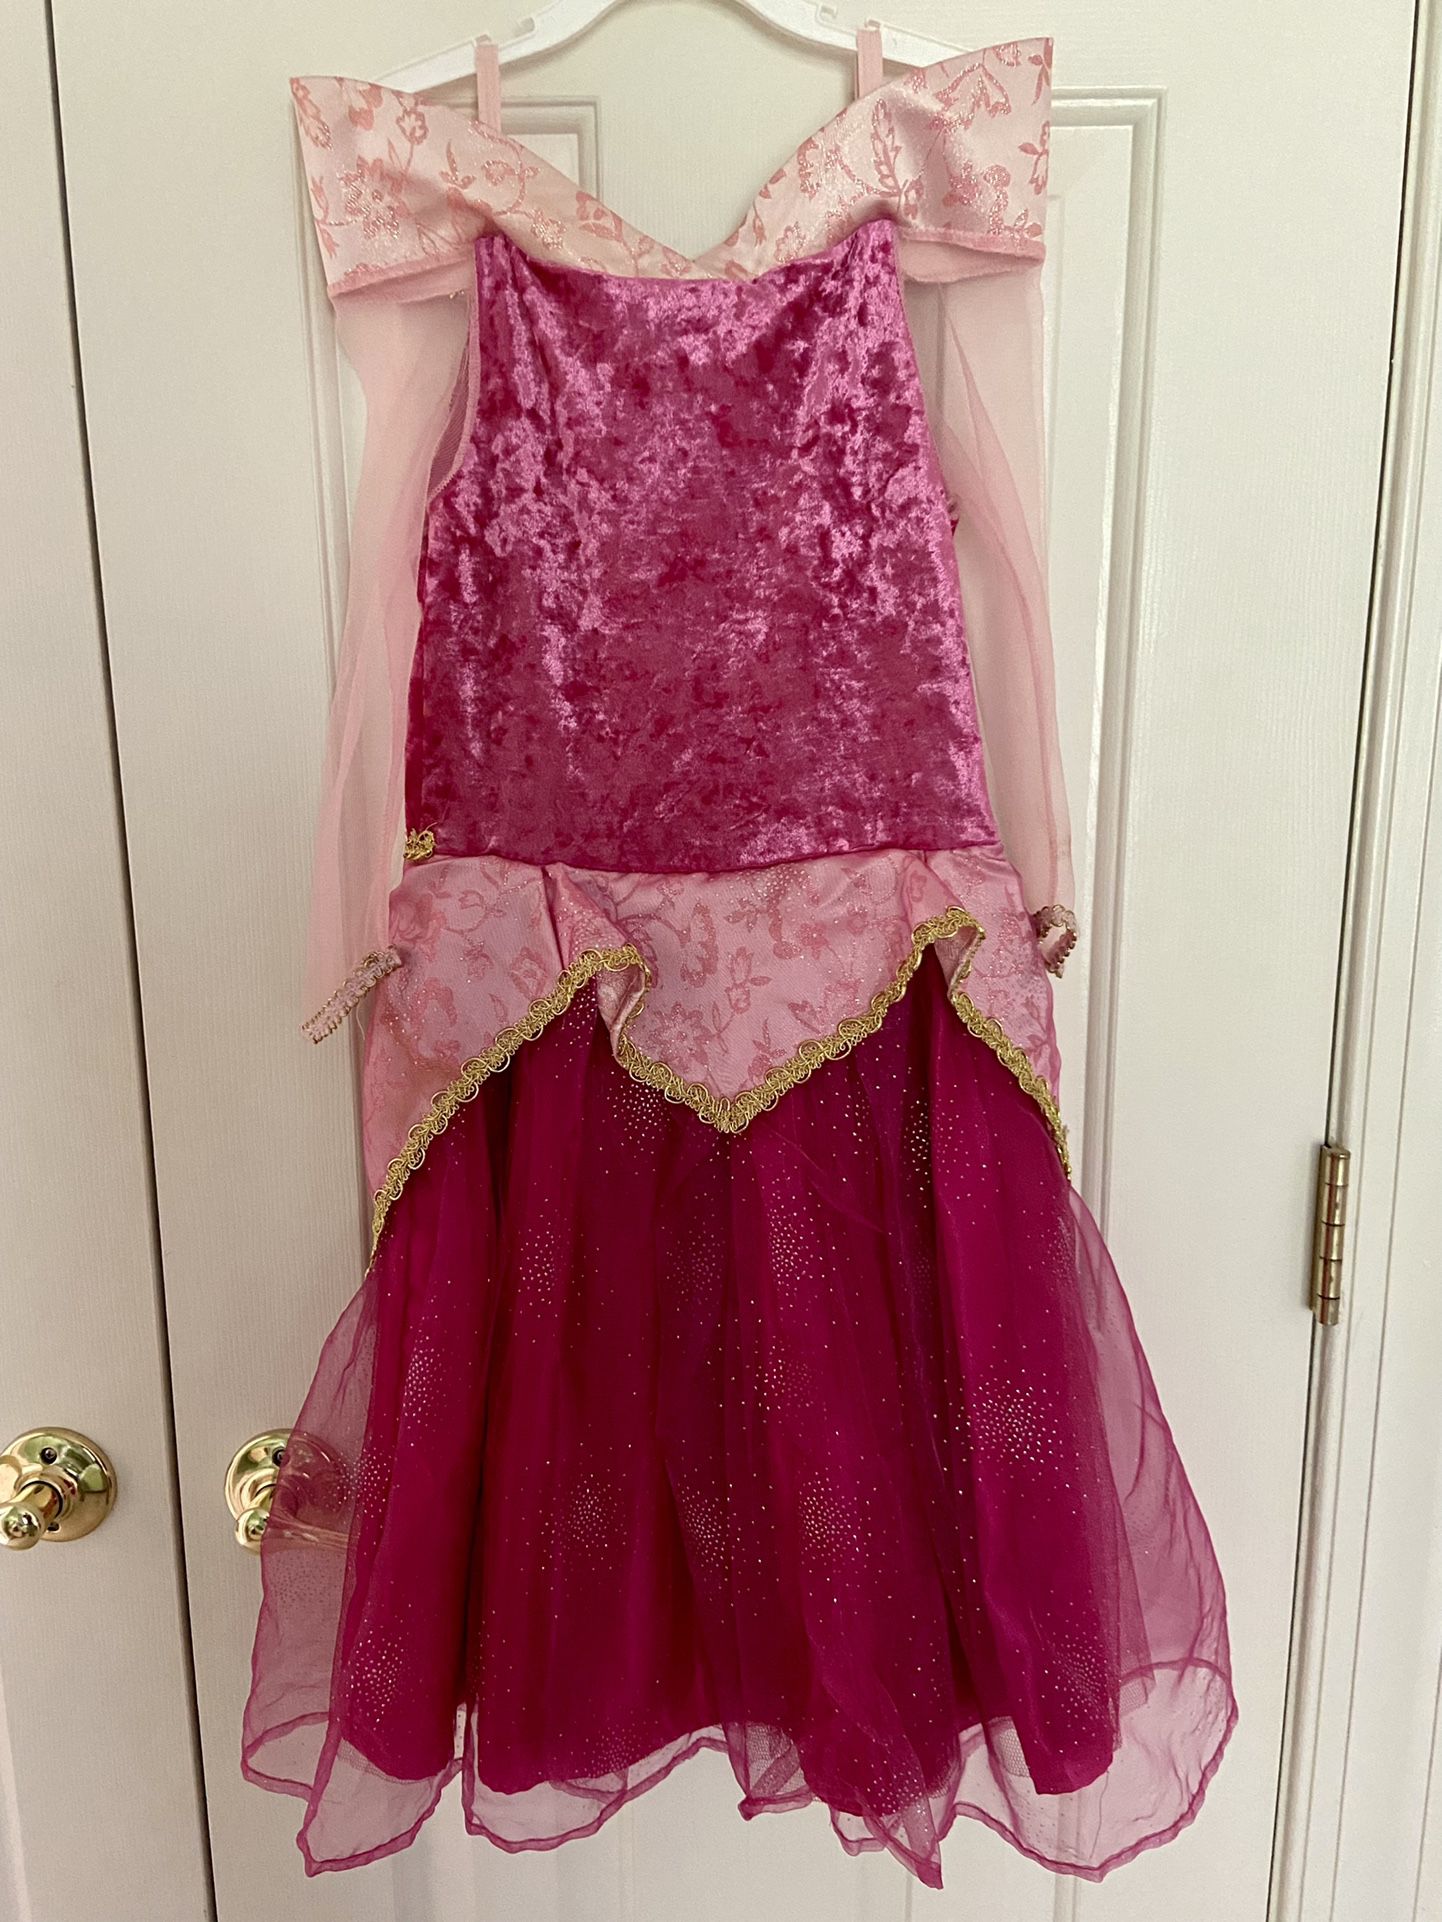 Authentic Disney Park Store Aurora Sleeping Beauty Costume Dress